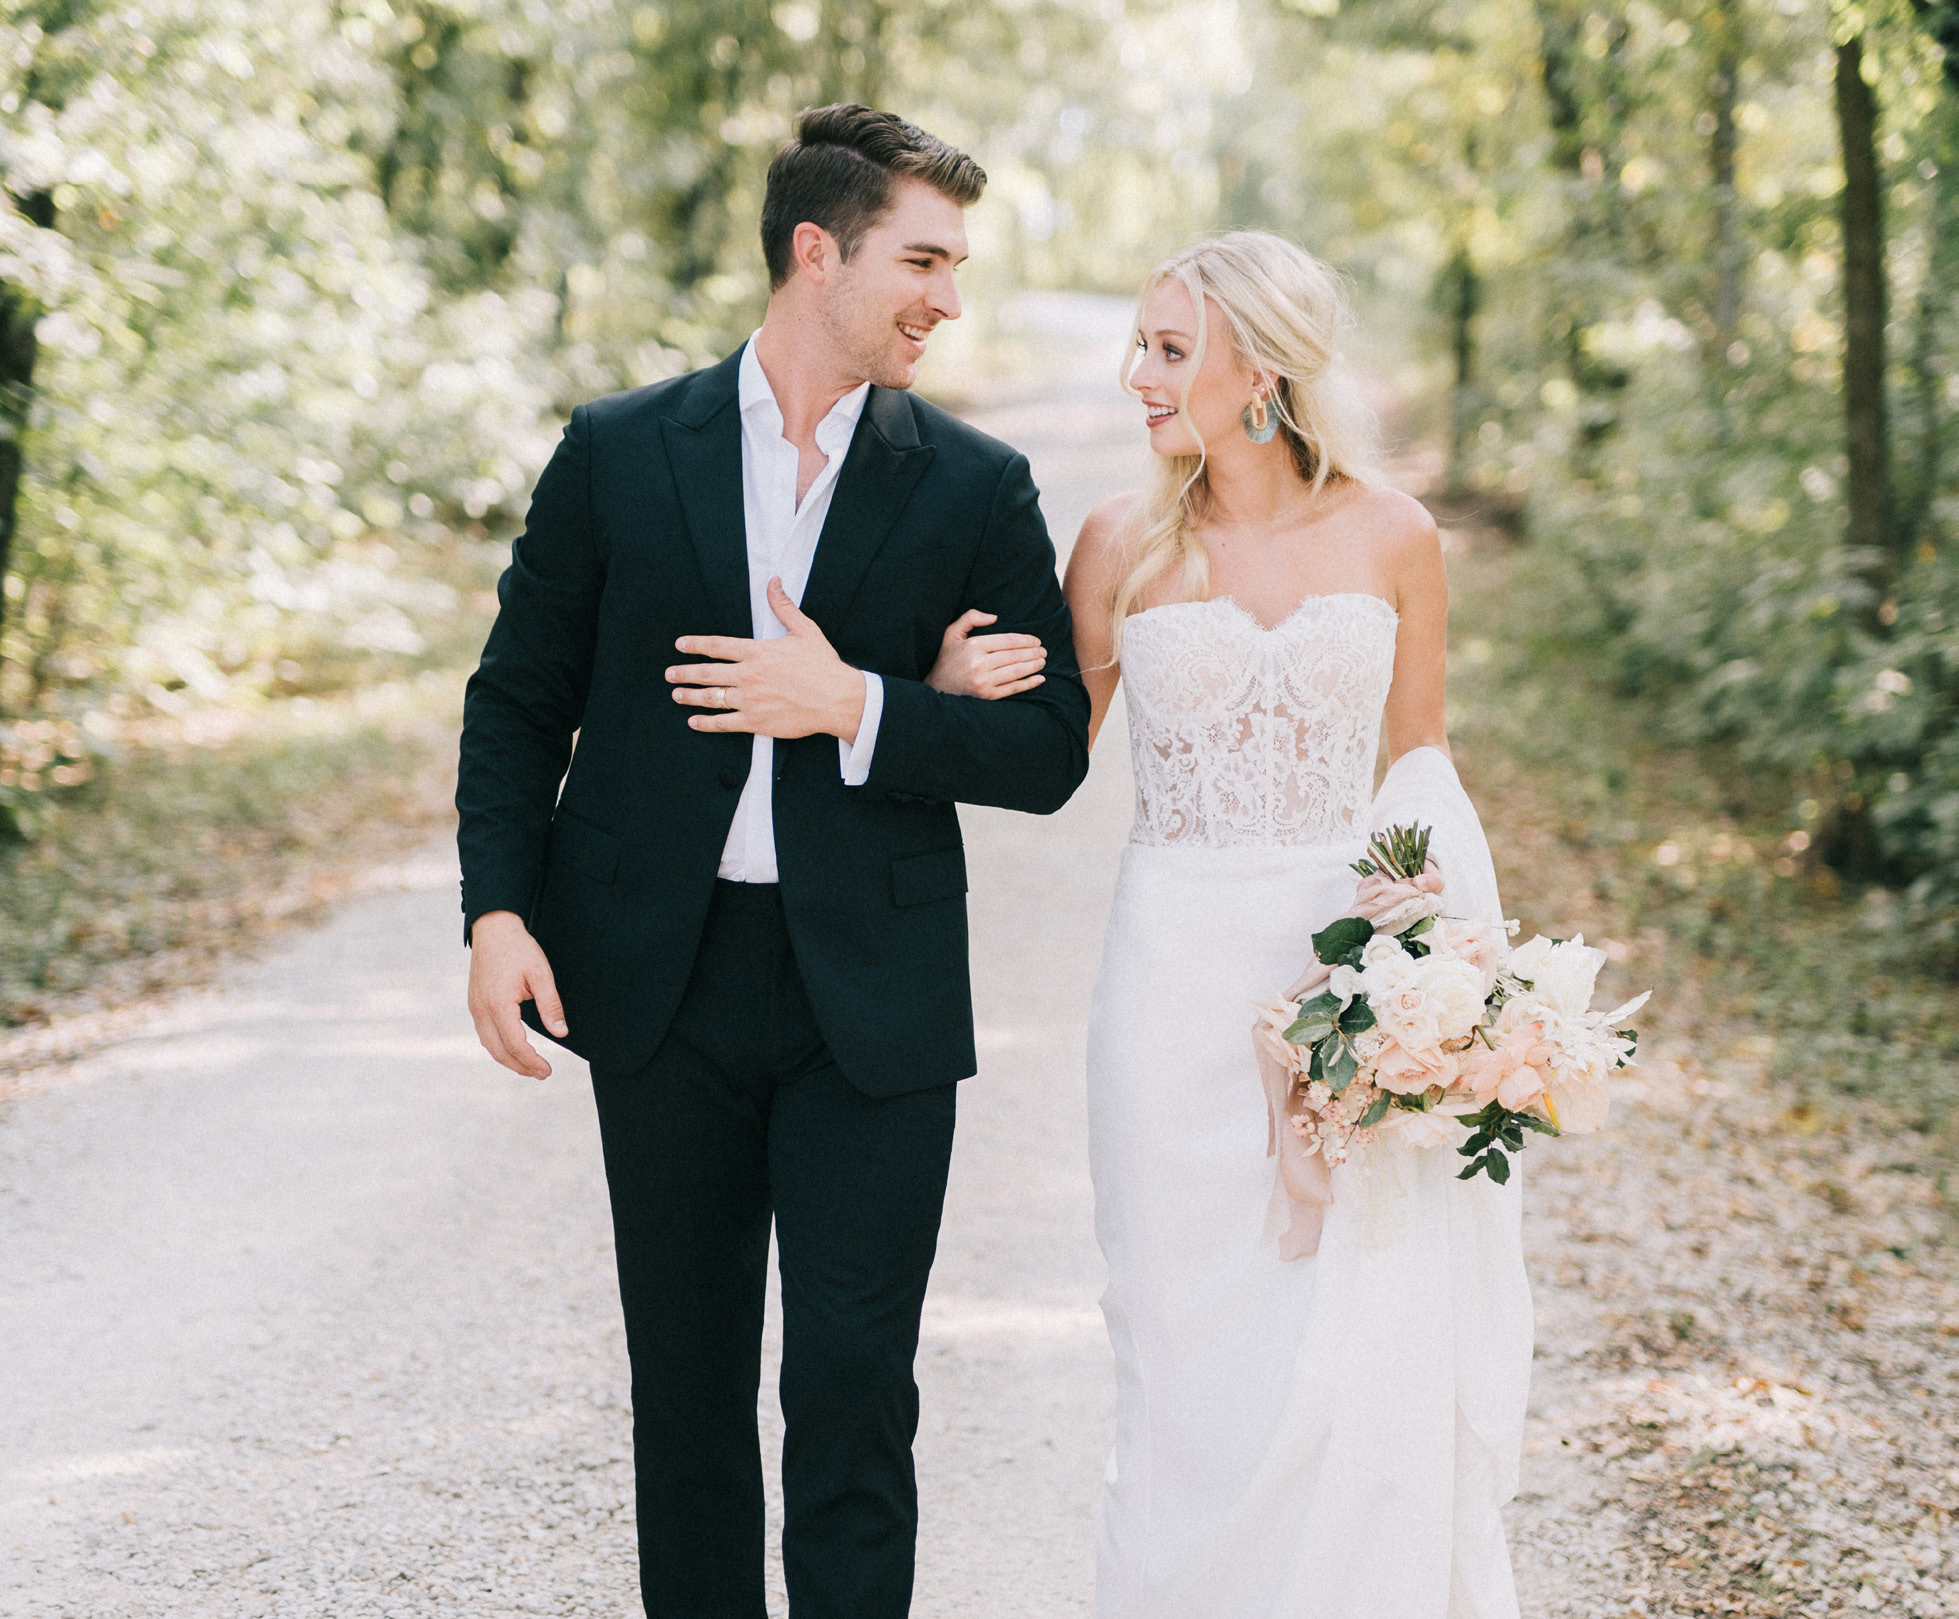 Wedding Walk Through by Brock + Co. – Jenny DeMarco Photography